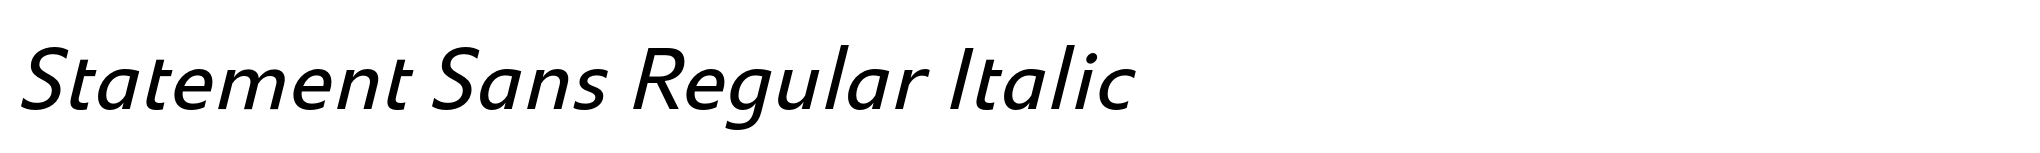 Statement Sans Regular Italic image